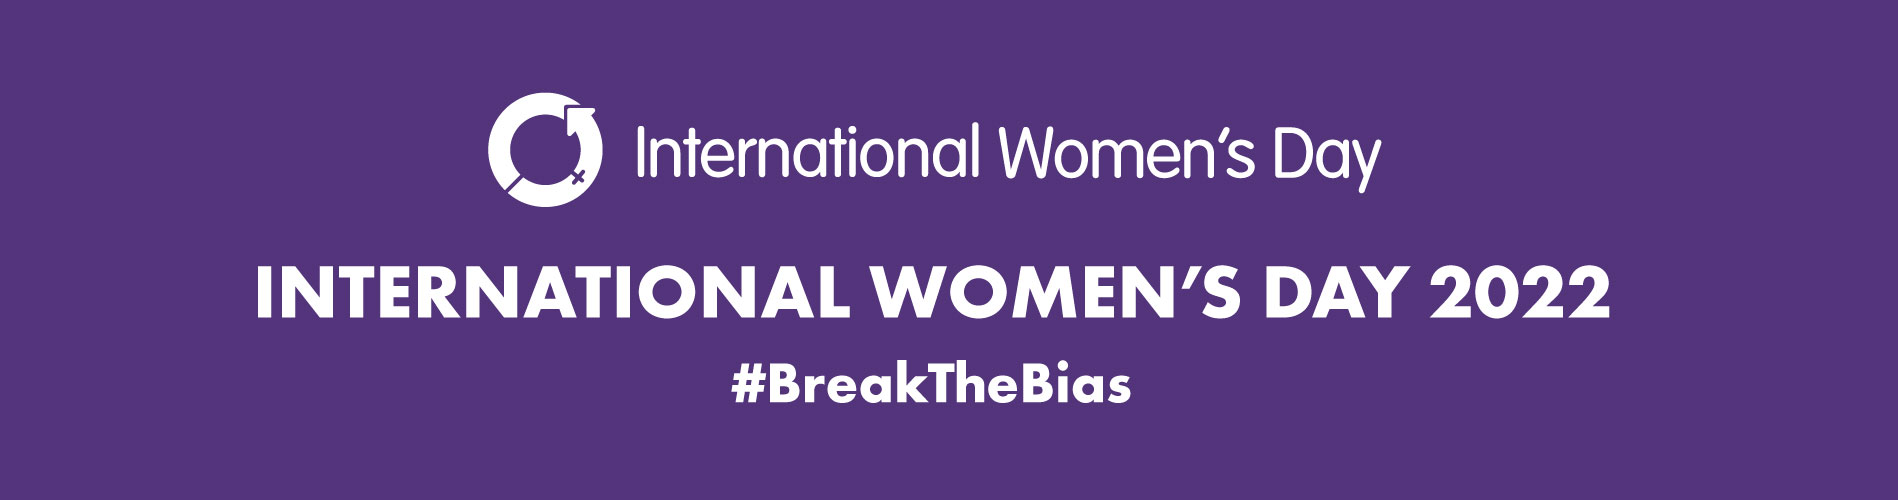 Purple International Women's Day banner featuring Break the bias hashtag